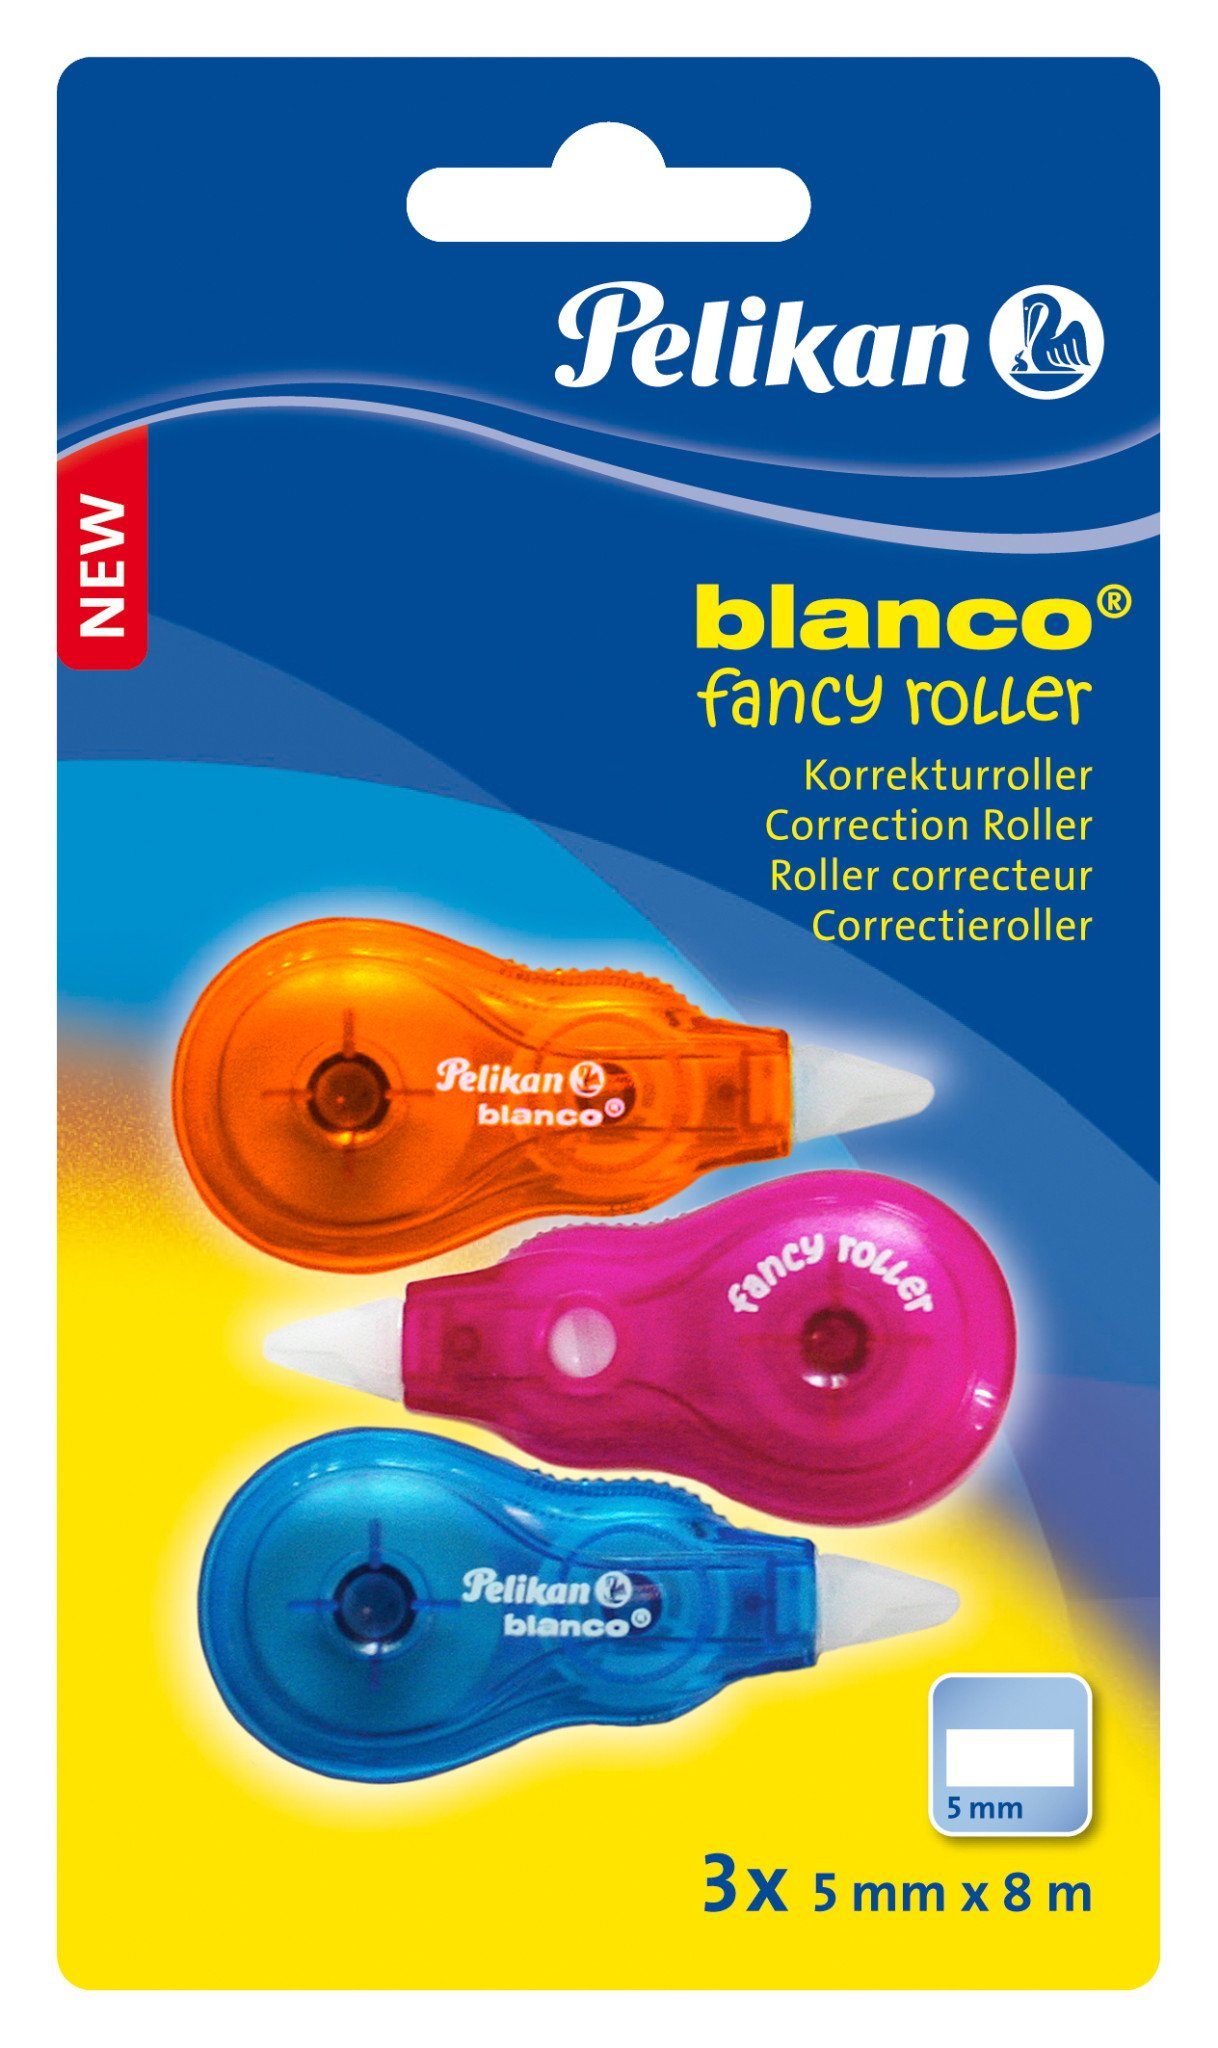 Fancy 5 Tintenkiller Pelikan Bandbreite Korrekturroller Set 3er blanco mm Blau/Pink/Orange